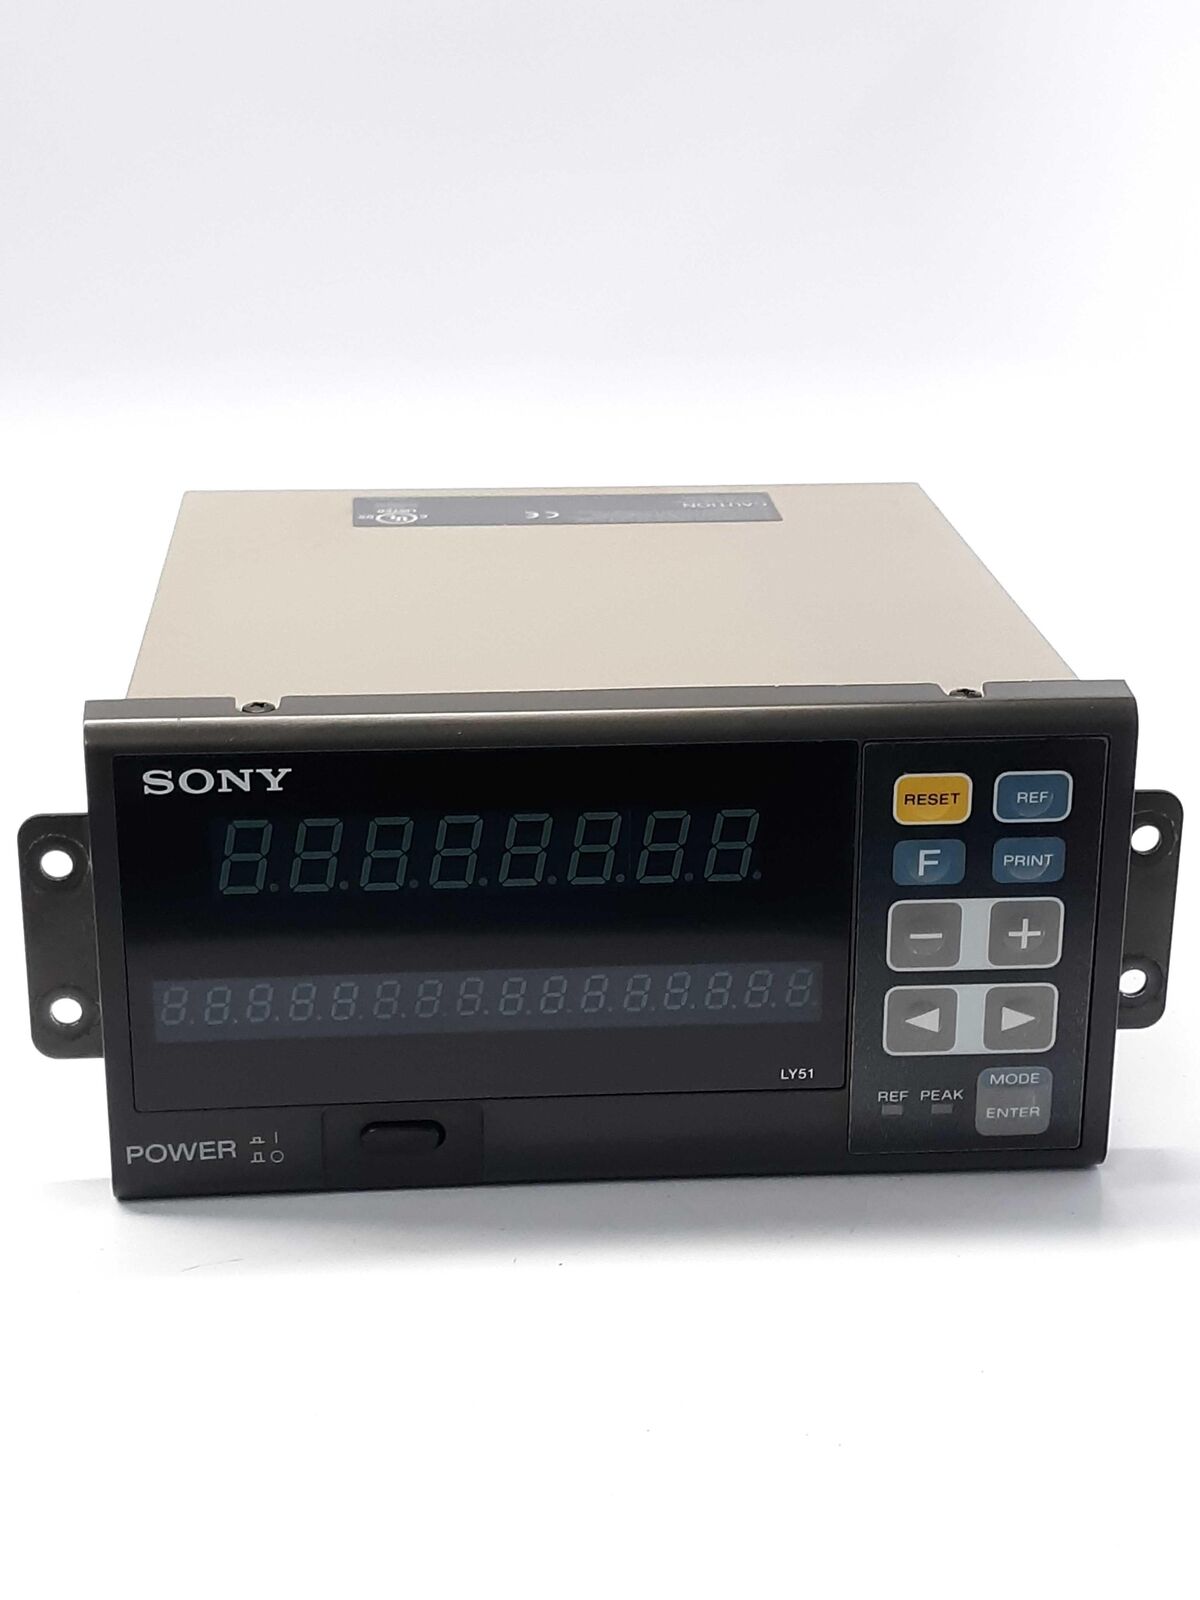 Sony LY51 Digital Gauge Display Controller 